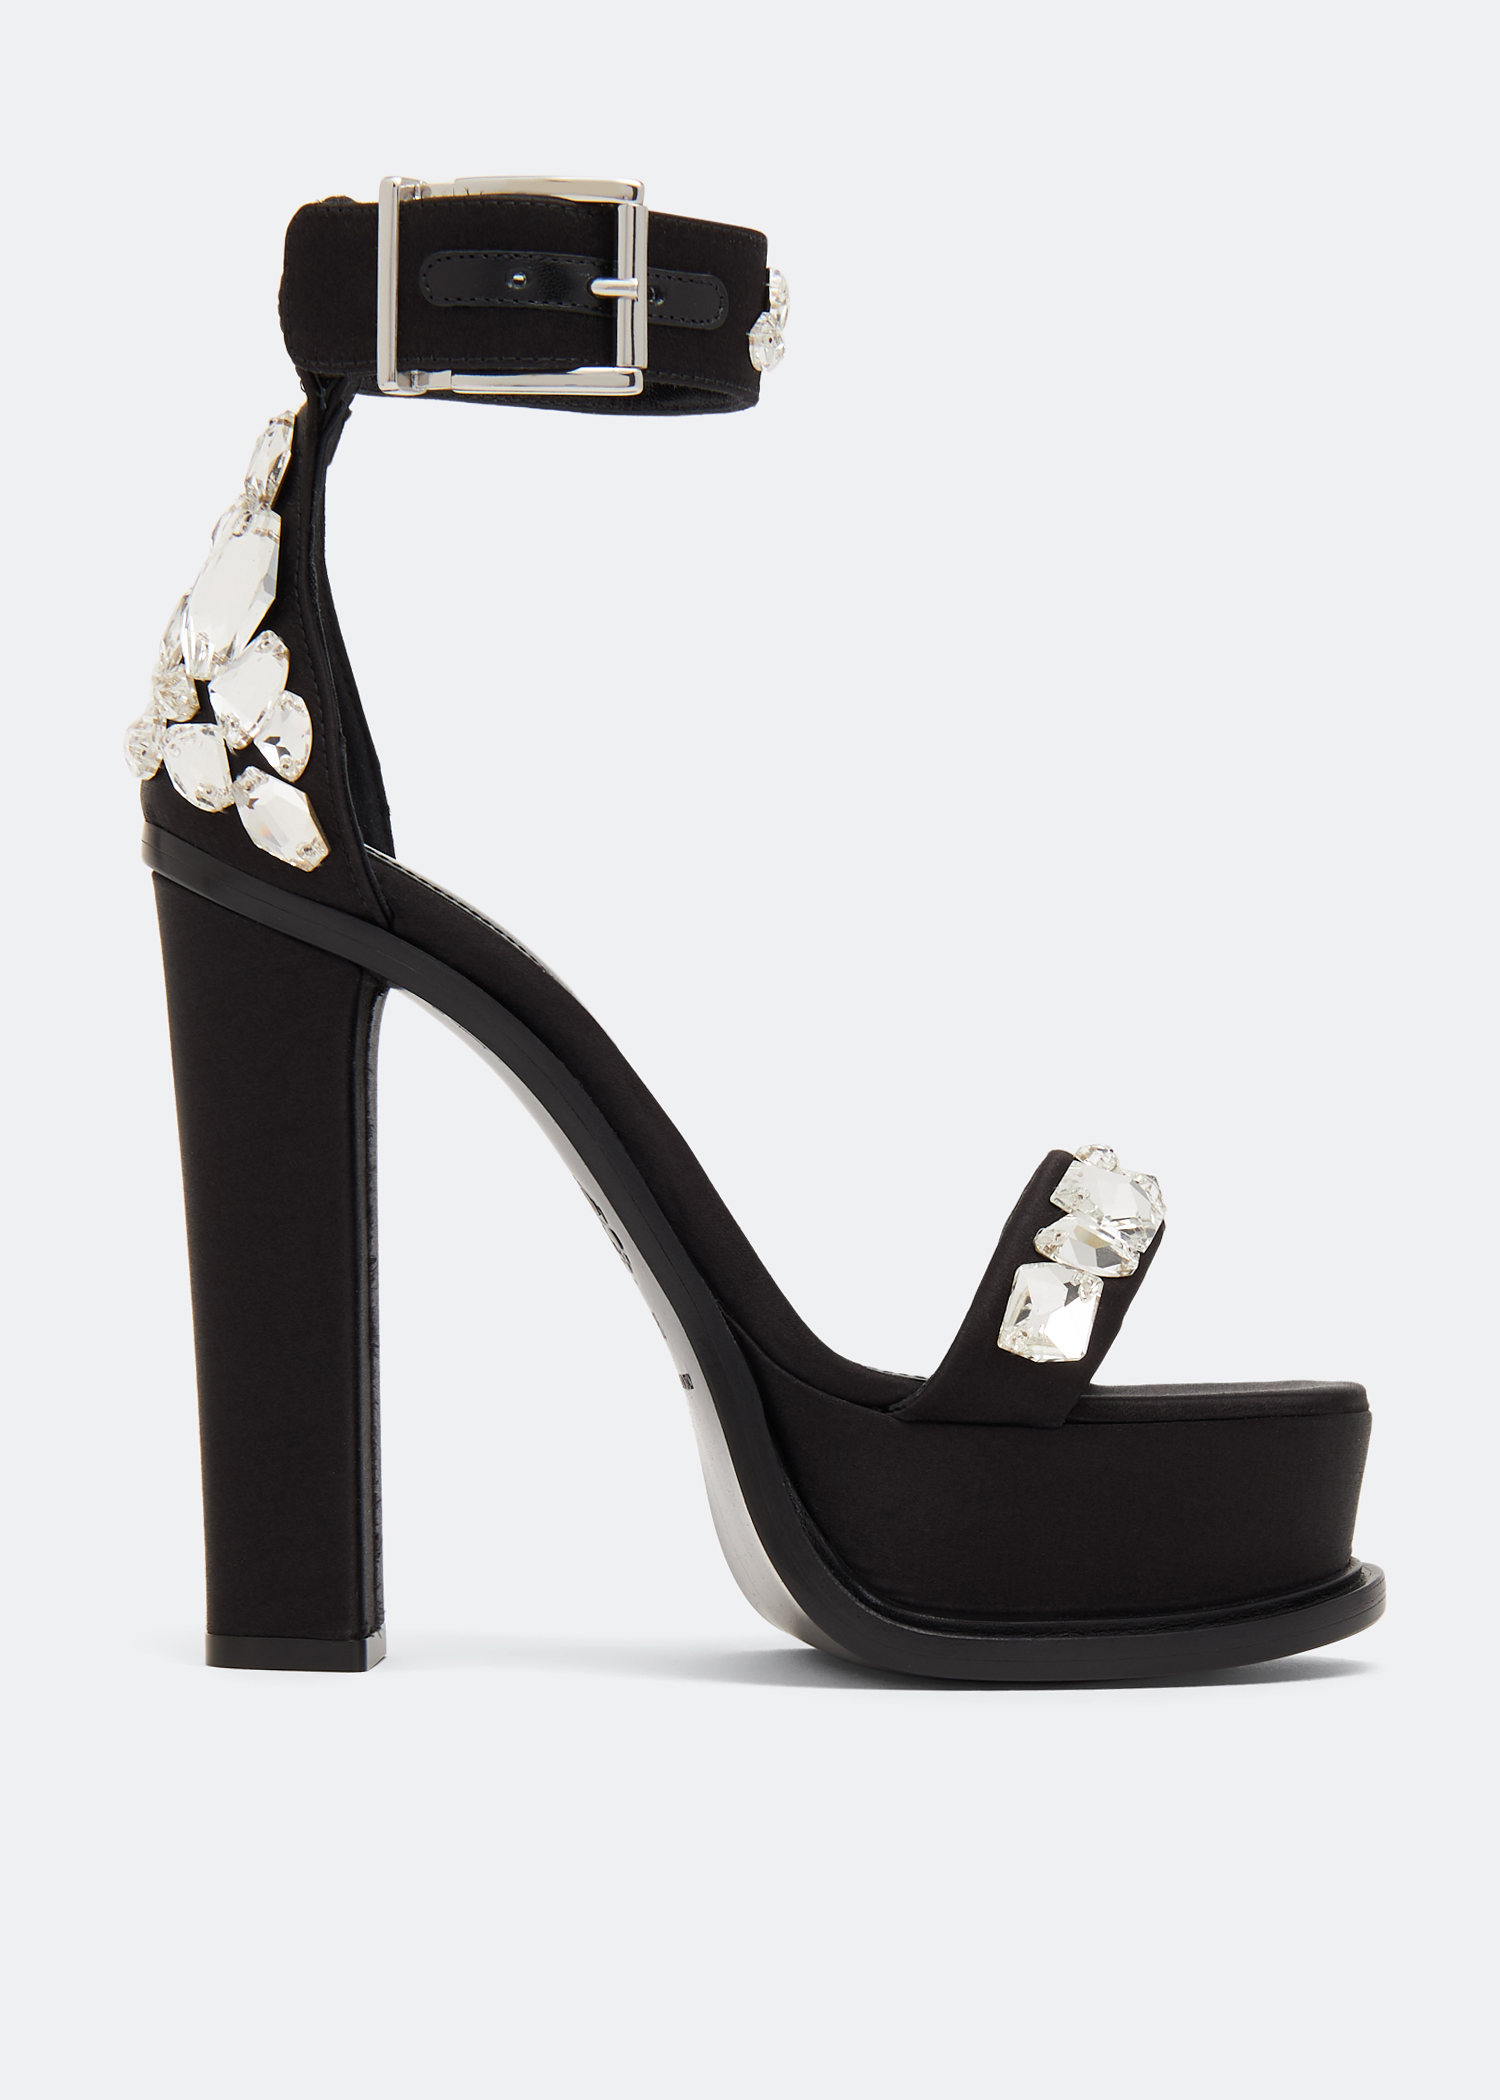 Alexander McQueen Leather platform sandals for Women - Black in